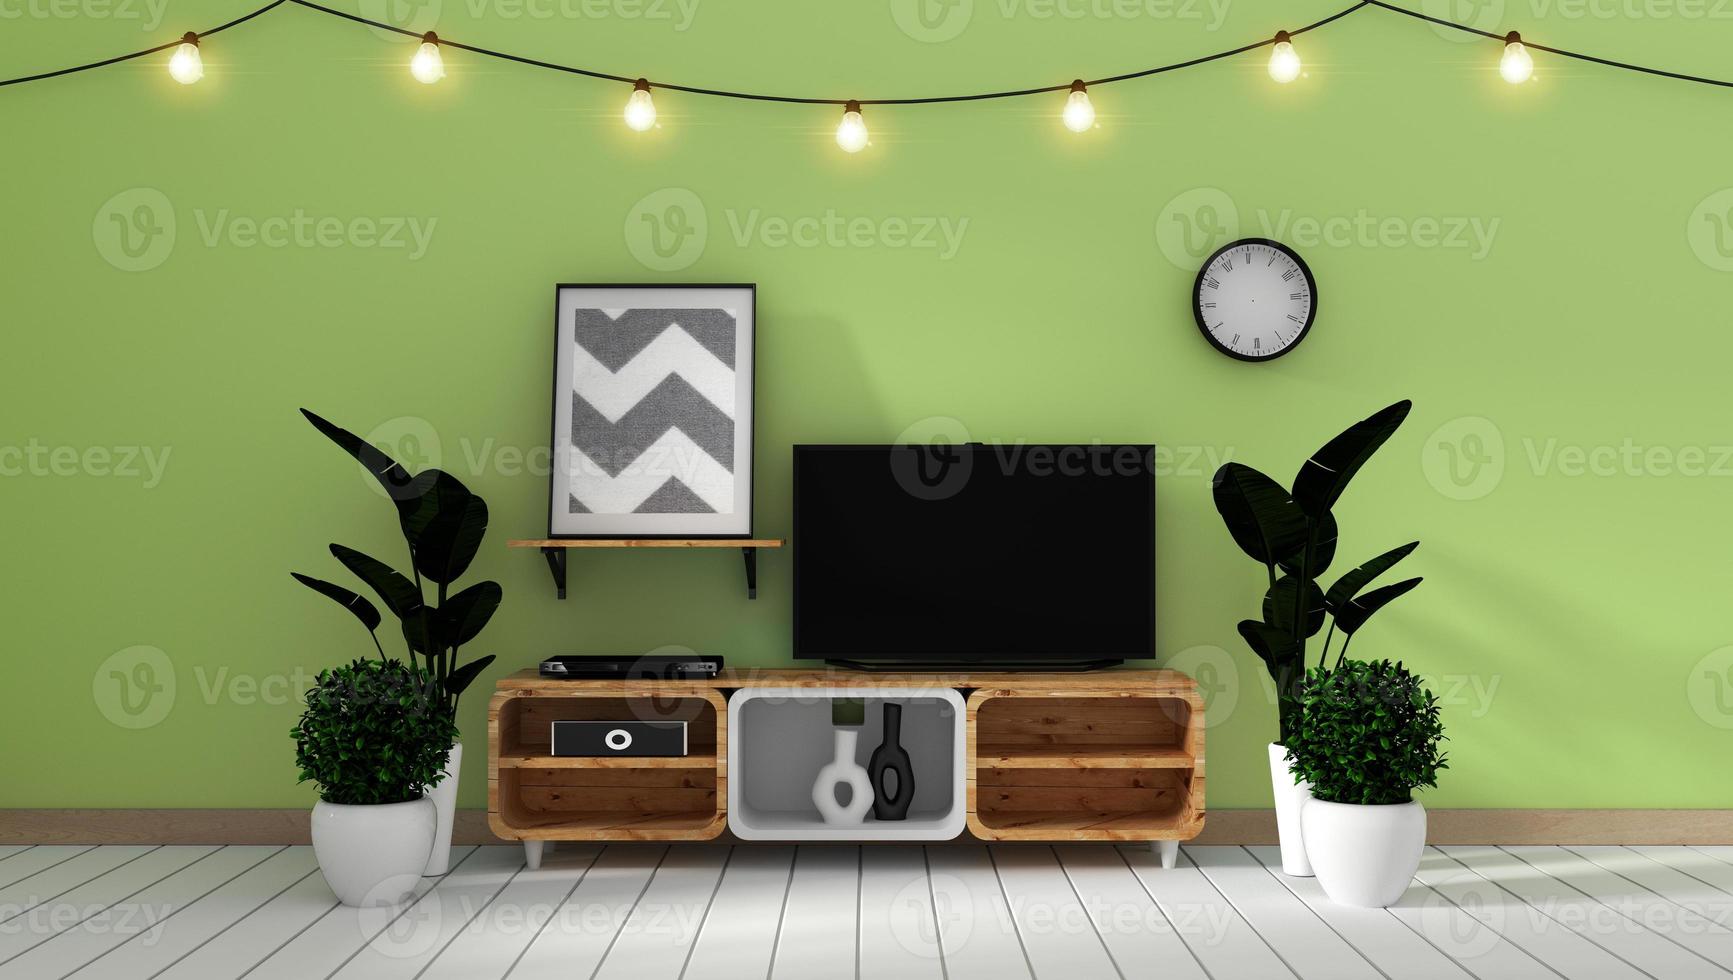 maquete de smart tv na parede verde na sala de estar japonesa. Renderização 3d foto